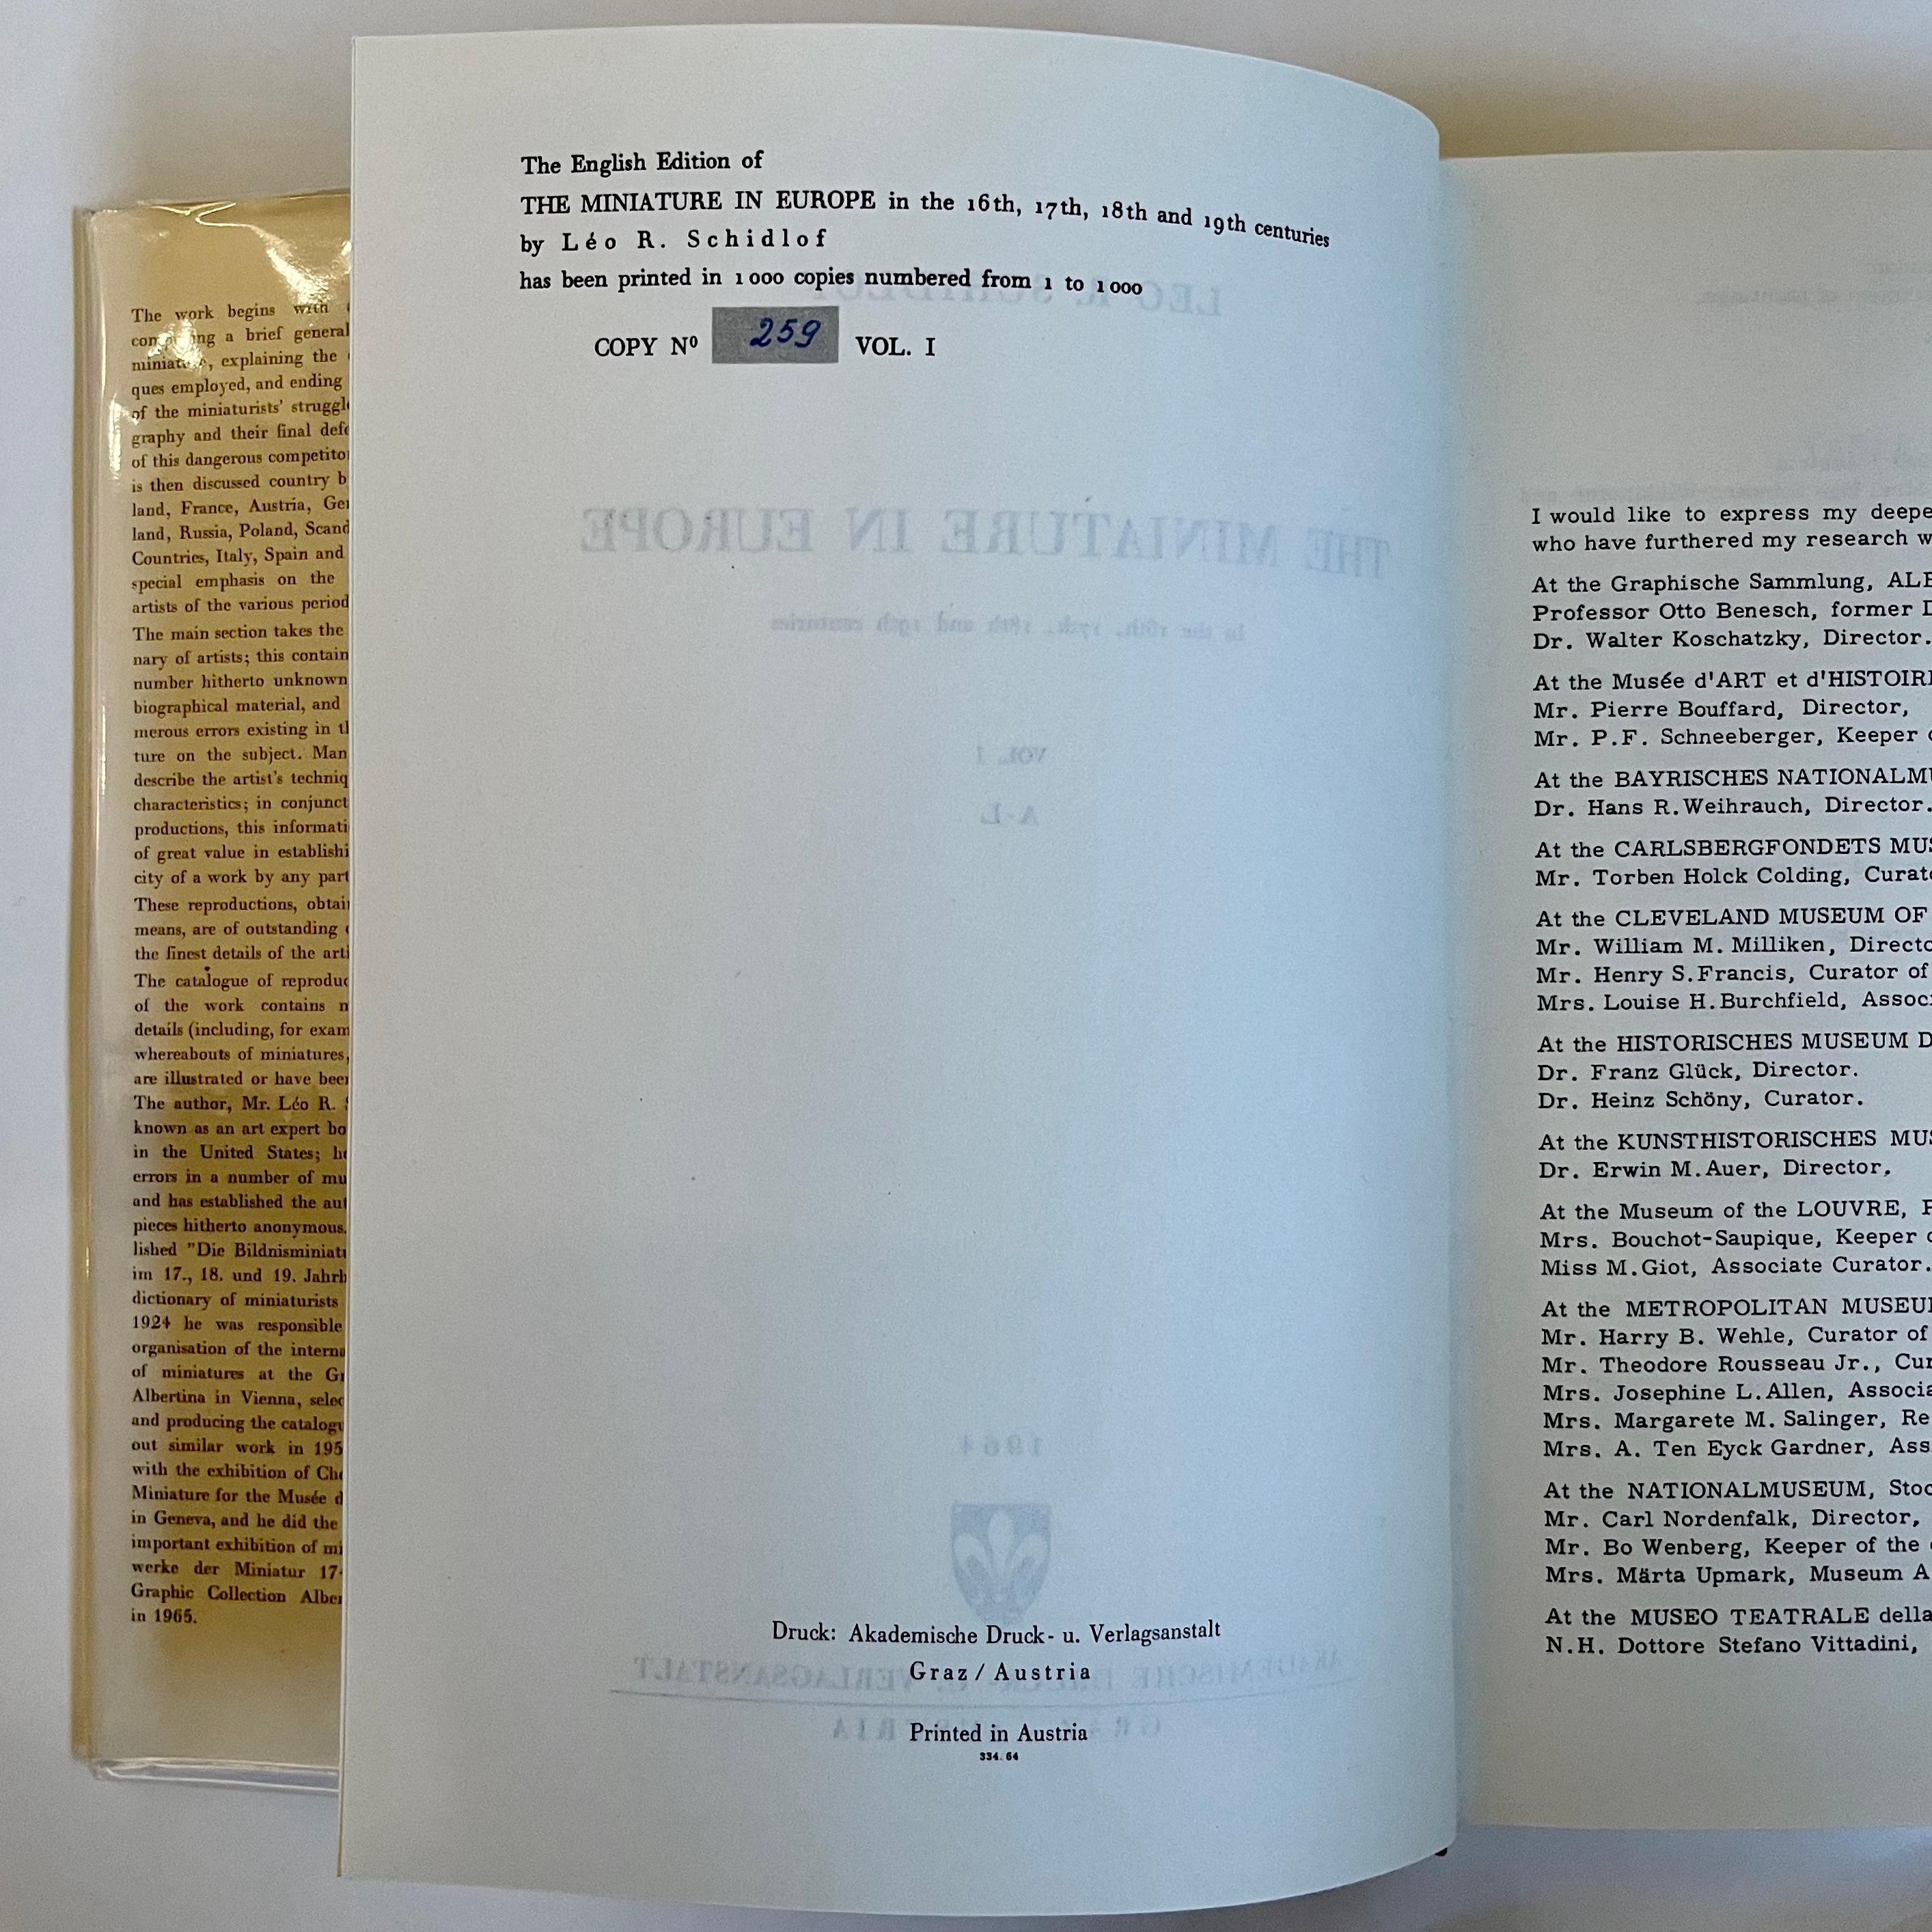 Paper The Miniature in Europe, 4 volumes - Leo R. Schidlof - Akademische Druck, 1964 For Sale